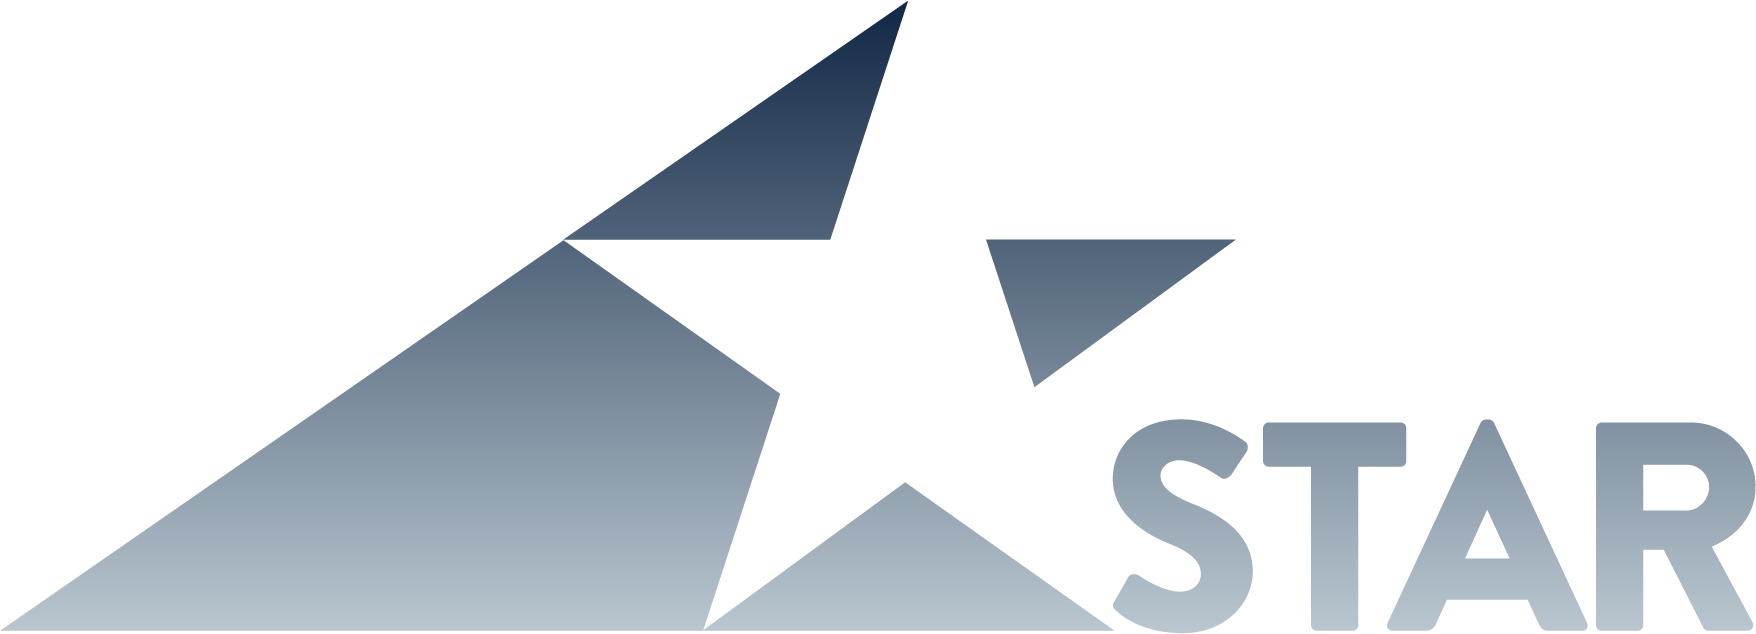 Star Rv Logo, Apollo Star Rv mieten in Australien, Star Rv Premium Wohnmobile